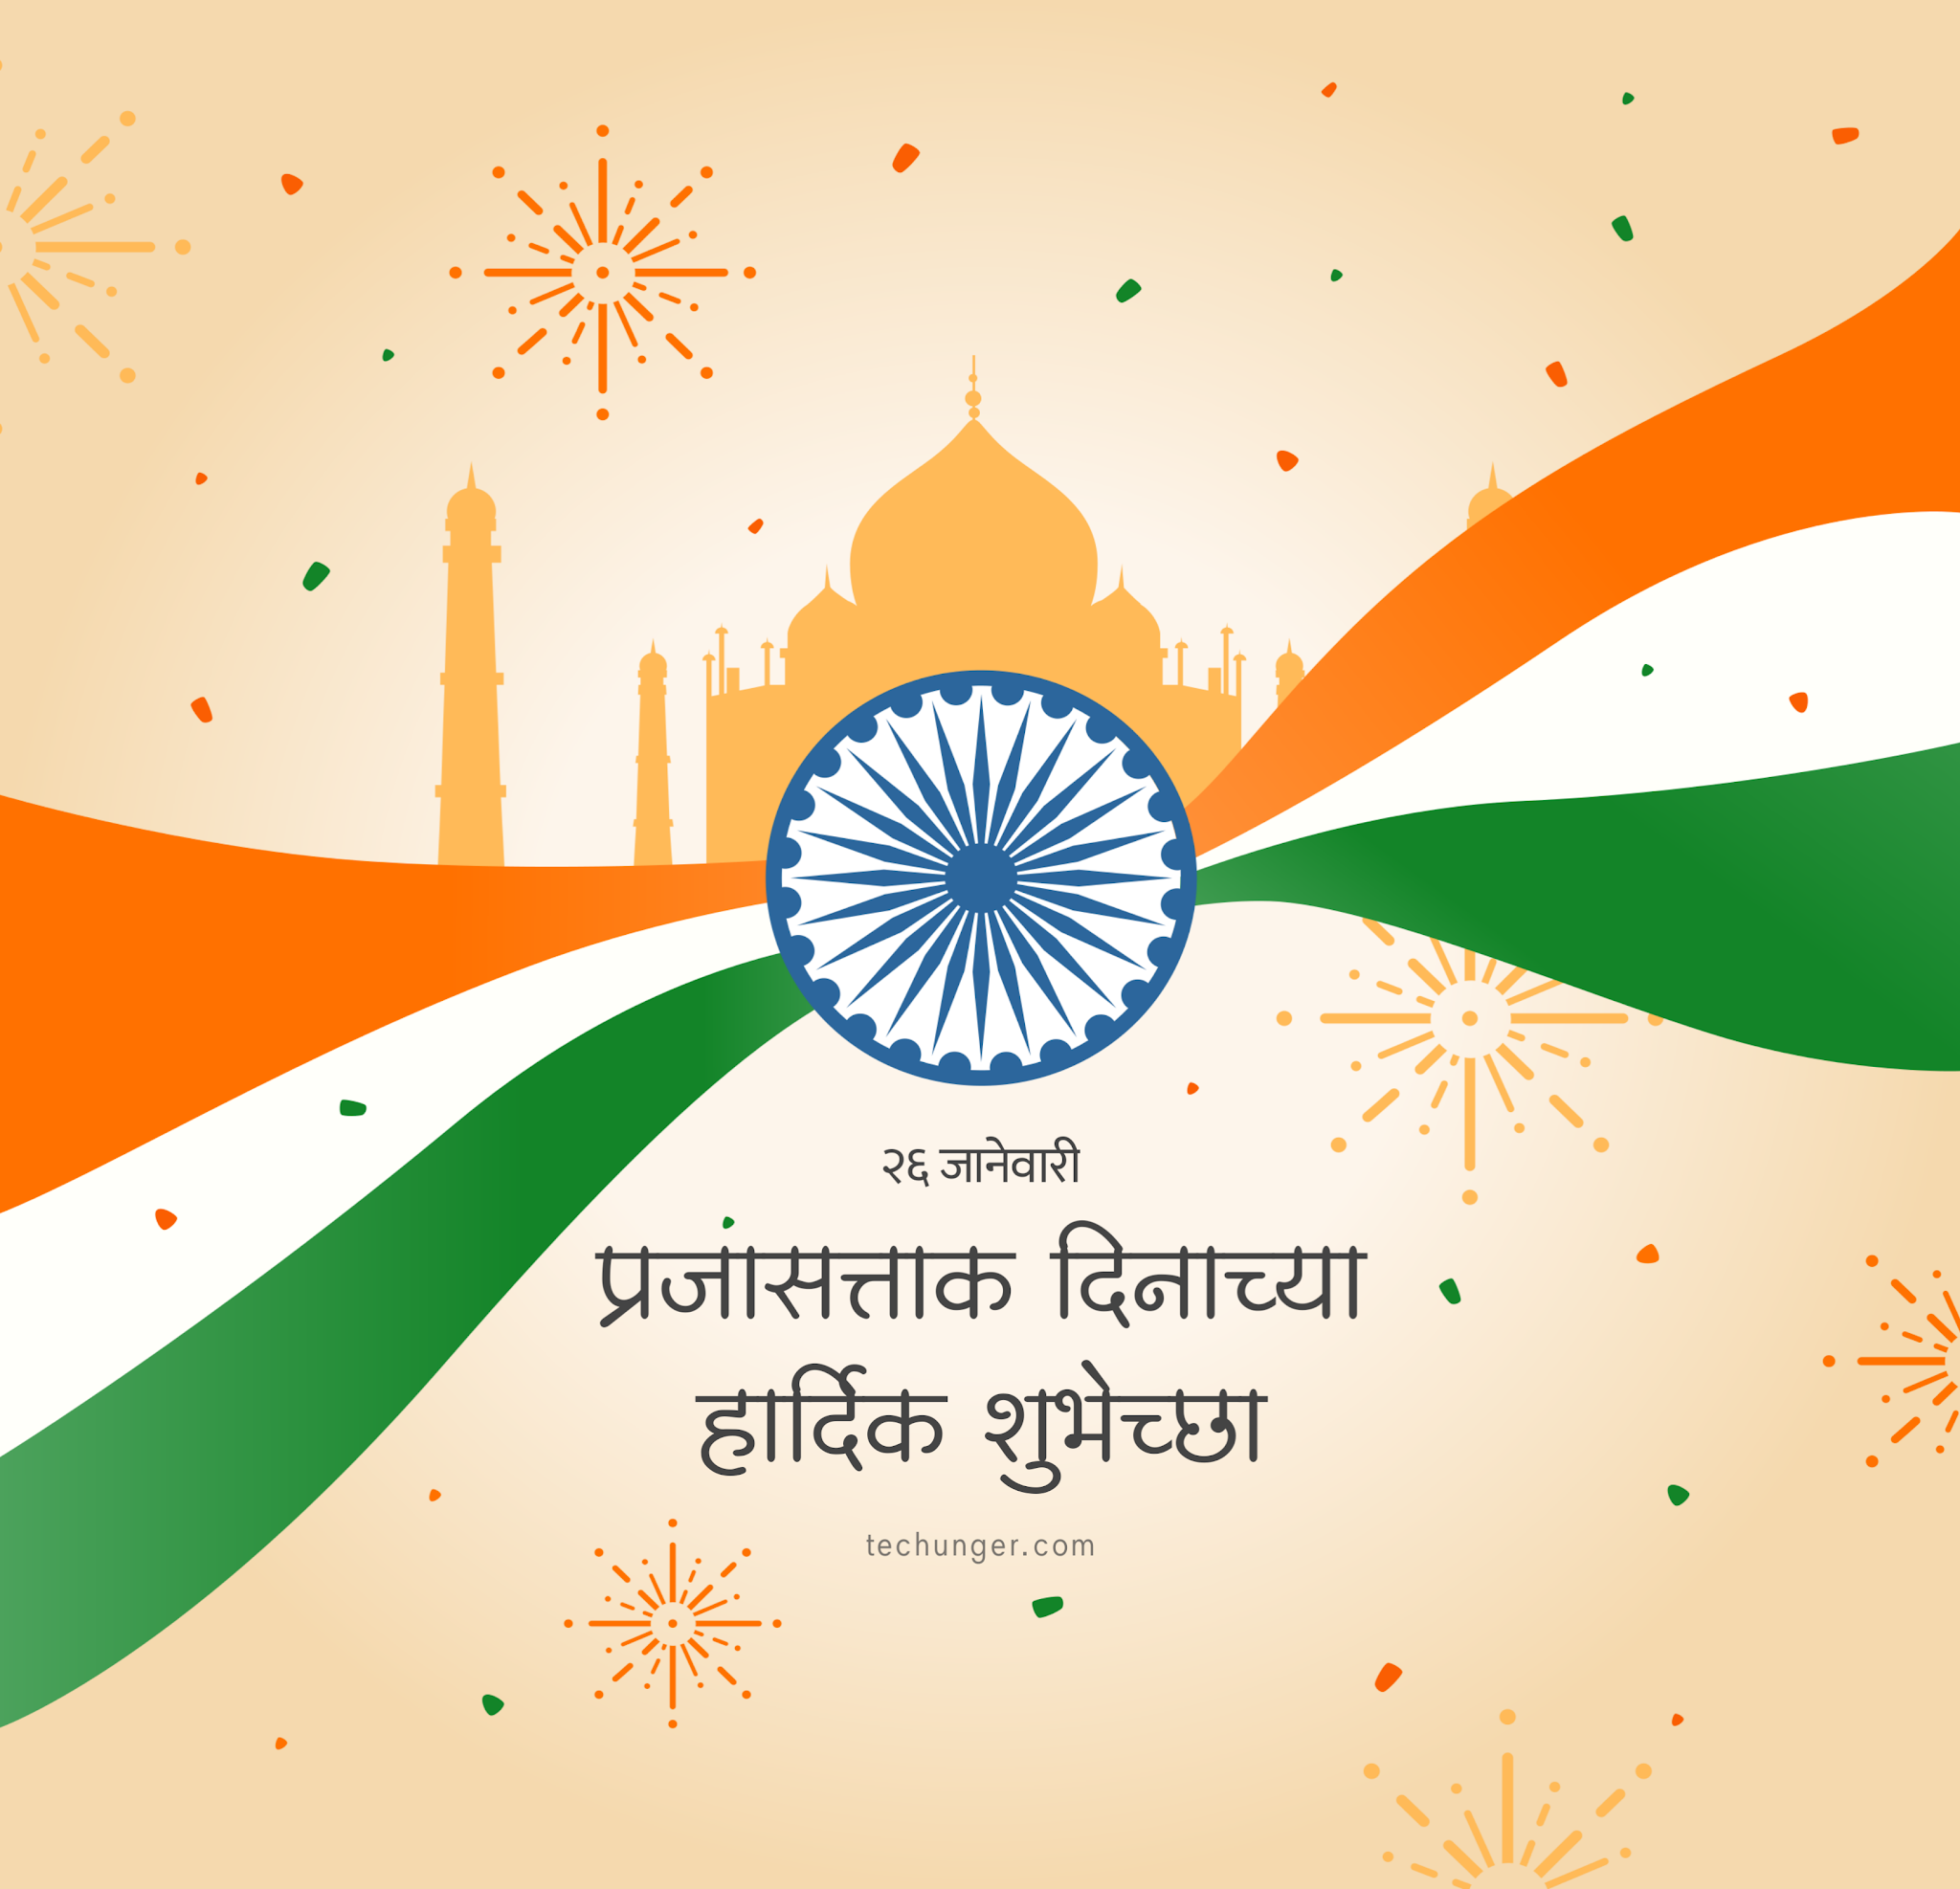 प्रजासत्ताक दिन, प्रजासत्ताक दिन 2021, Republic day Free Status, Republic Day Marathi Status, Republic Day 2021, TecHunger, www.techunger.com, saurabh chaudhari